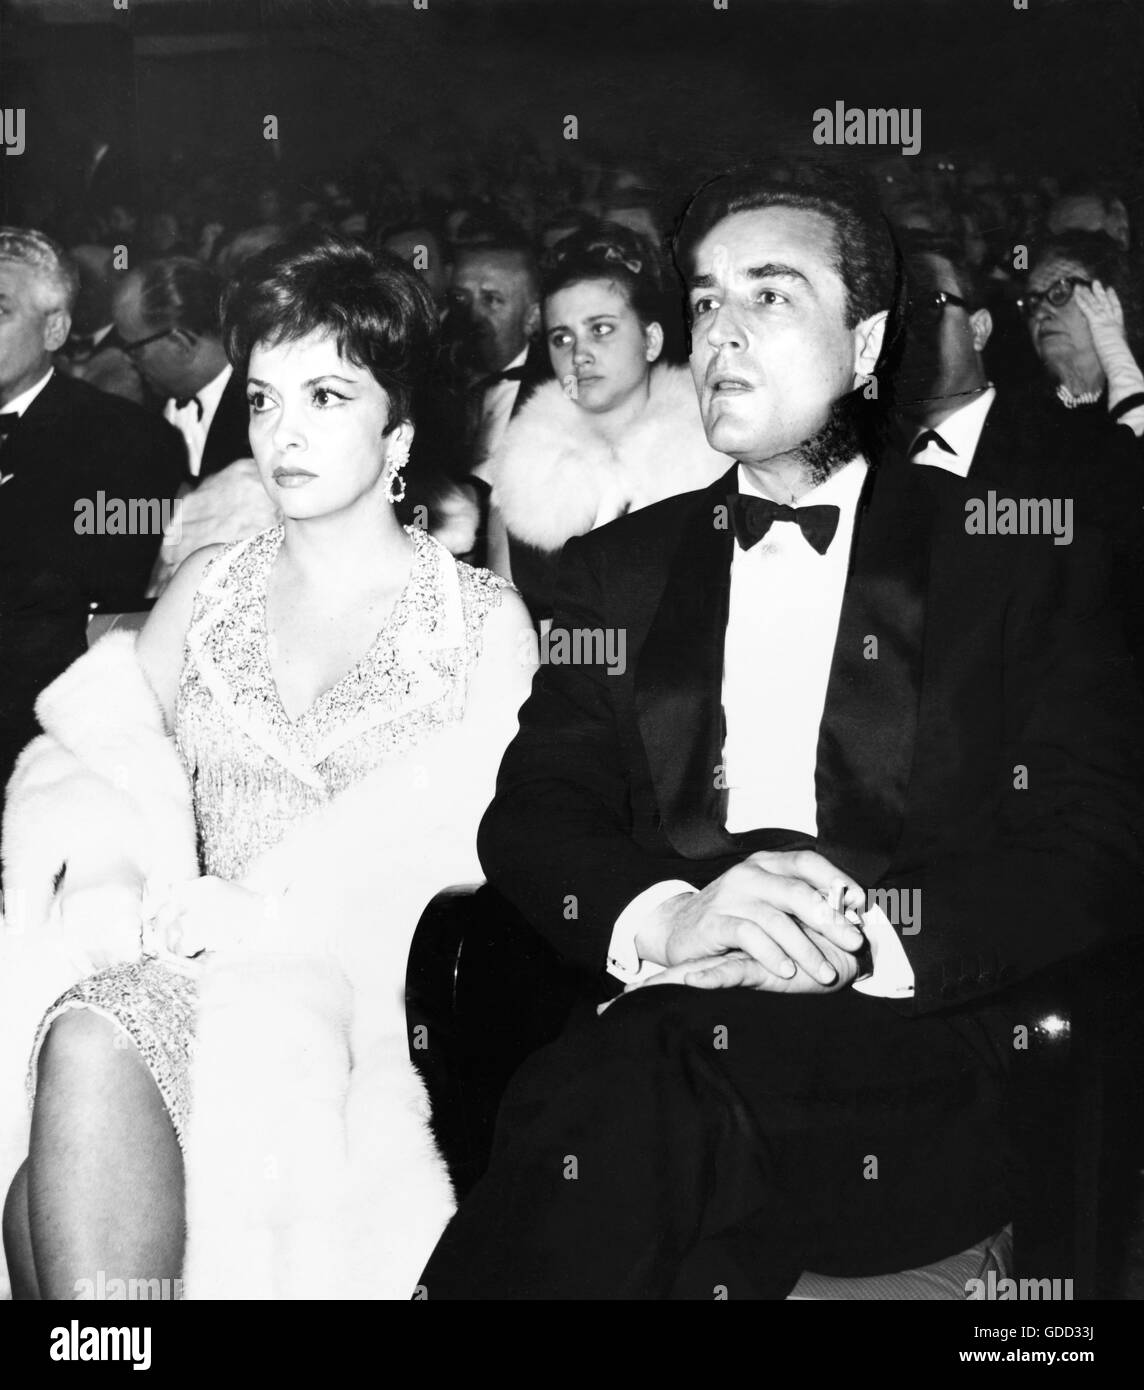 Lollobrigida, Gina, * 4.7.1927, Italian actress, half length, with Vittorio Gassmann, at premiere of the movie 'The Leopard' (Il gattopardo), 28.3.1963, Stock Photo